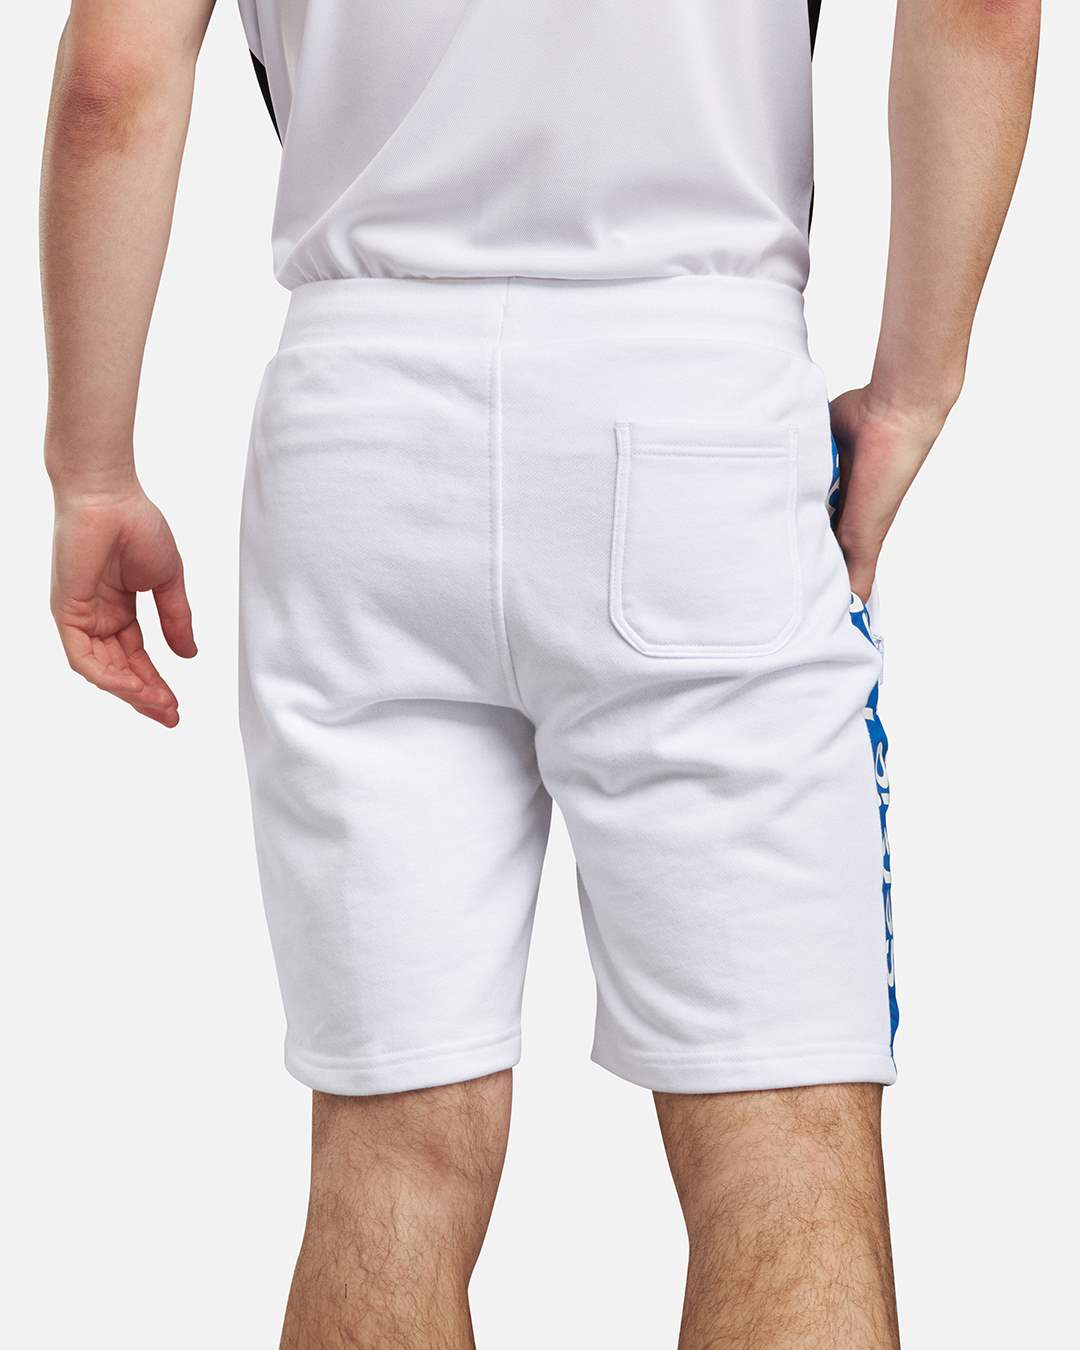 Sergio Tacchini Fascia Shorts - White/Blue